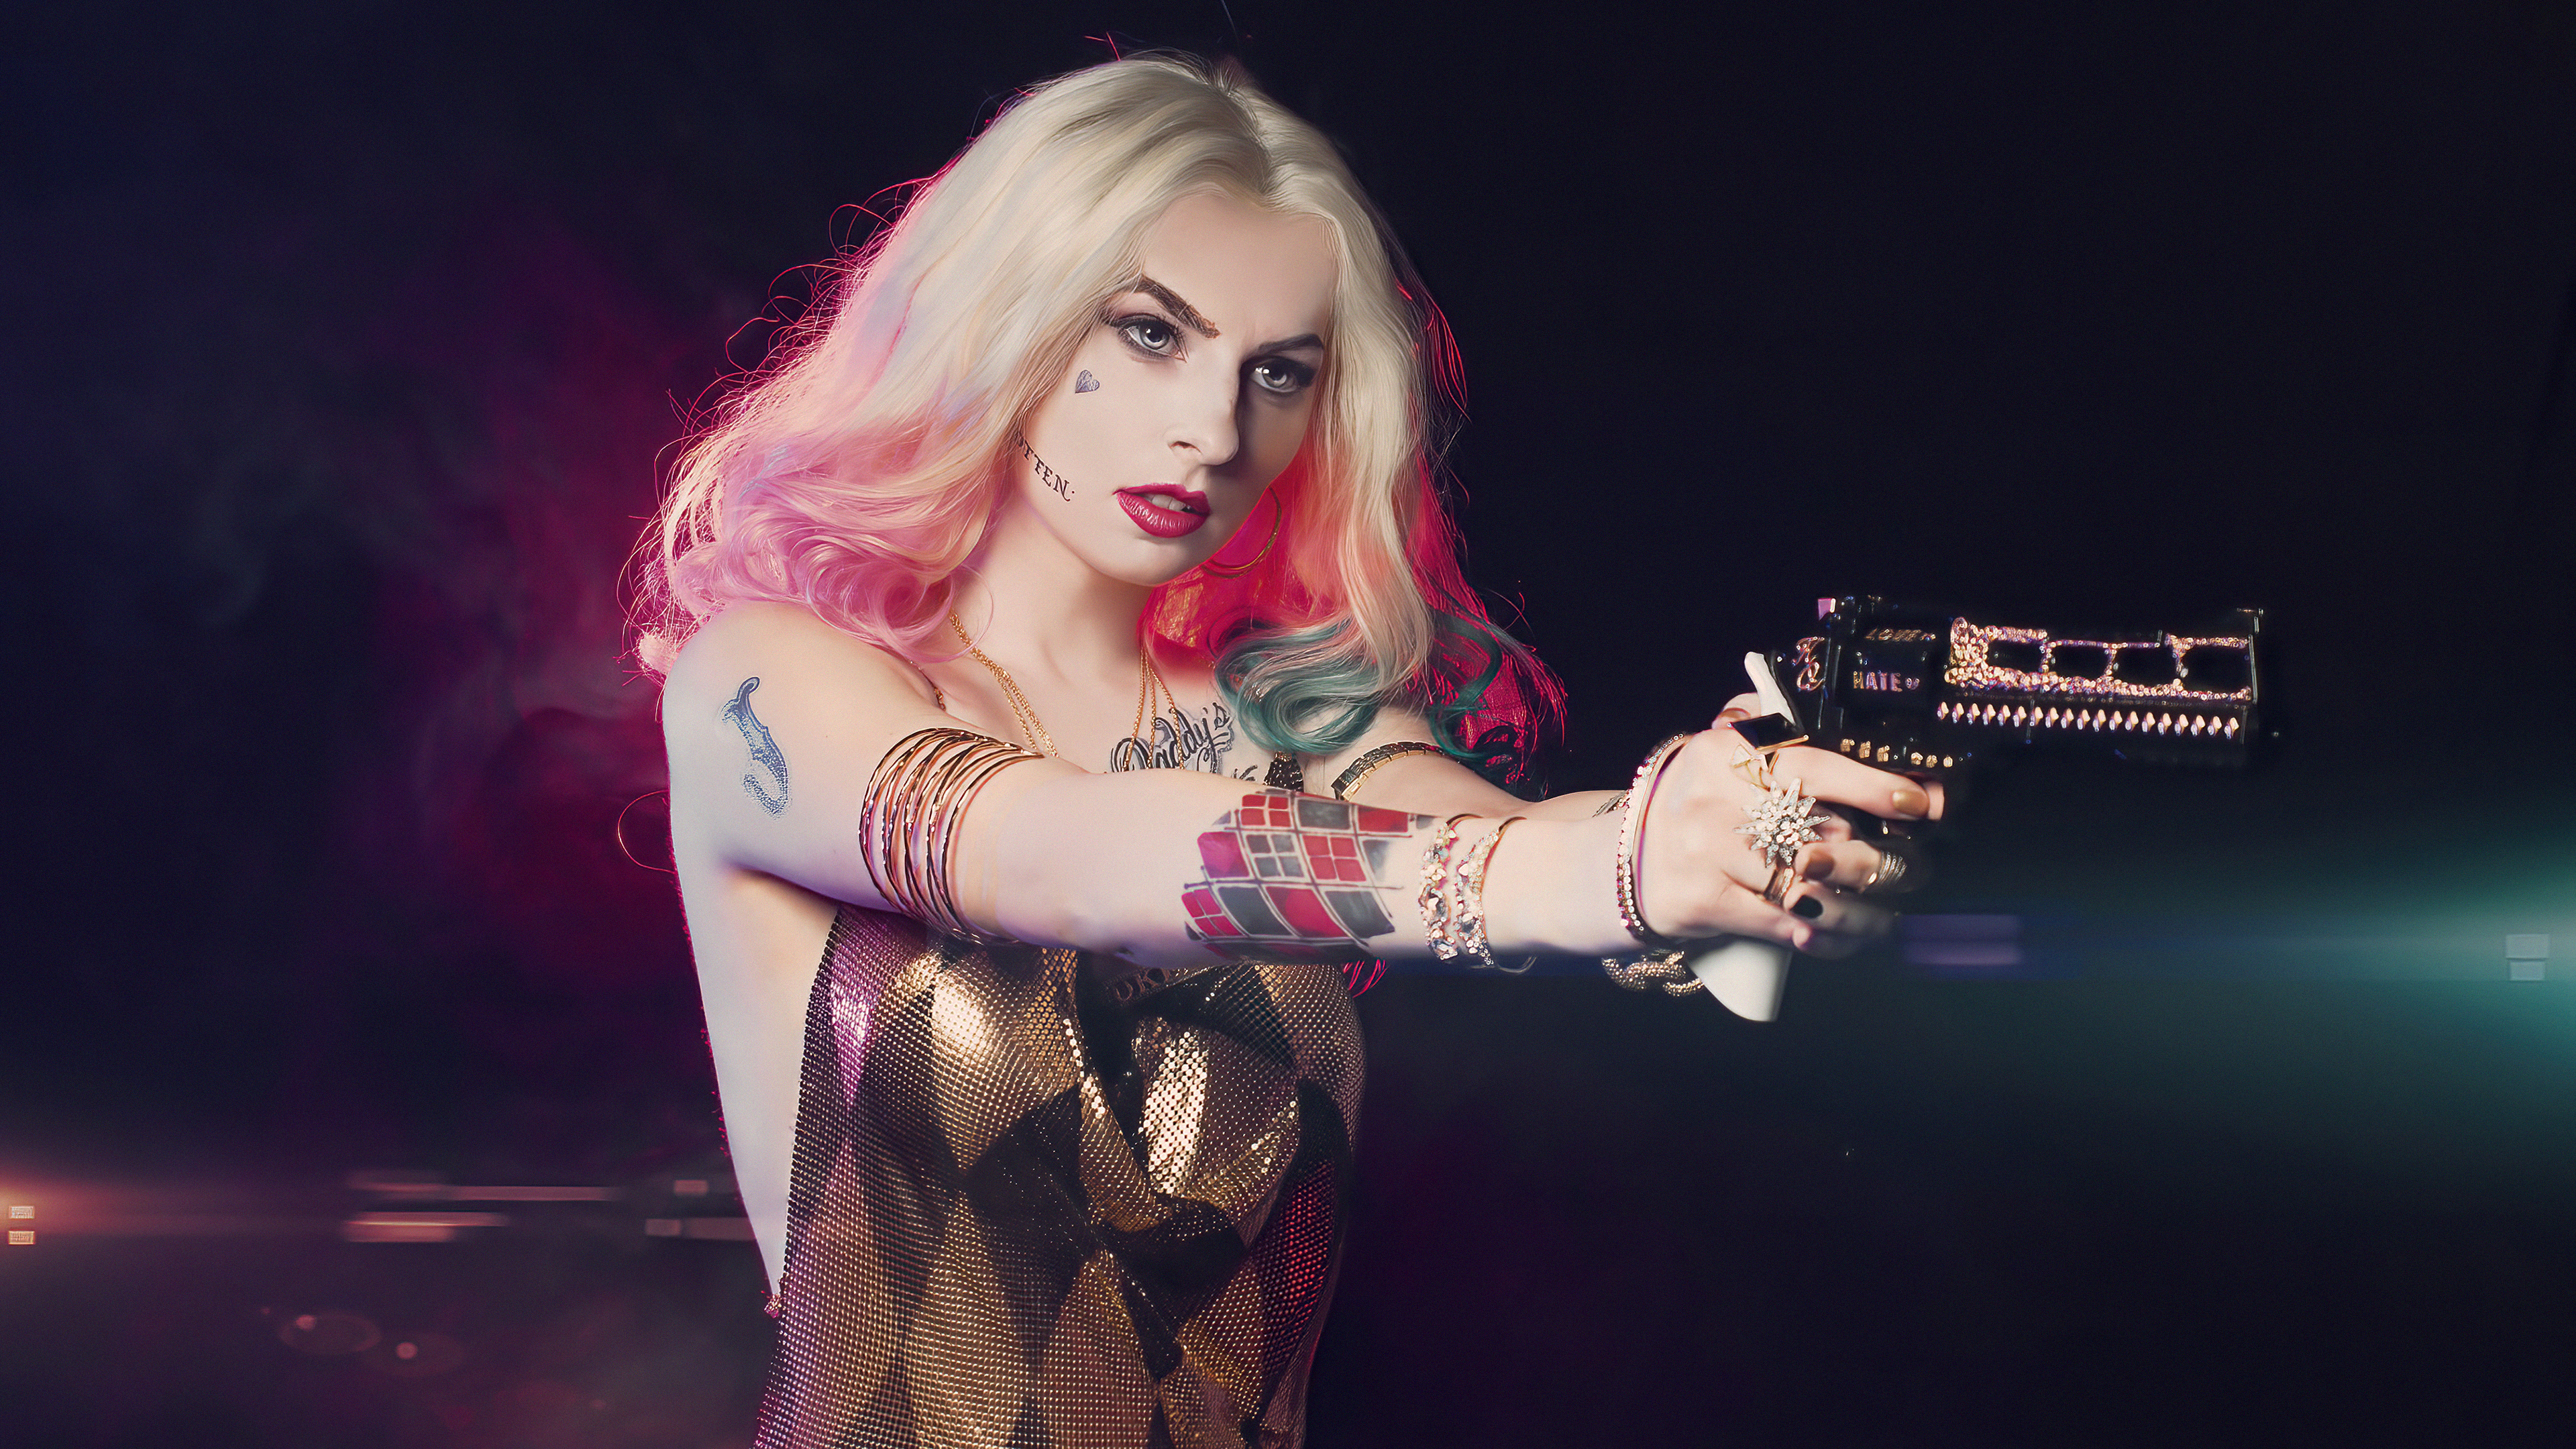 Baixar papel de parede para celular de Mulheres, Harley Quinn, Revólver, Cabelo Loiro, Cosplay gratuito.